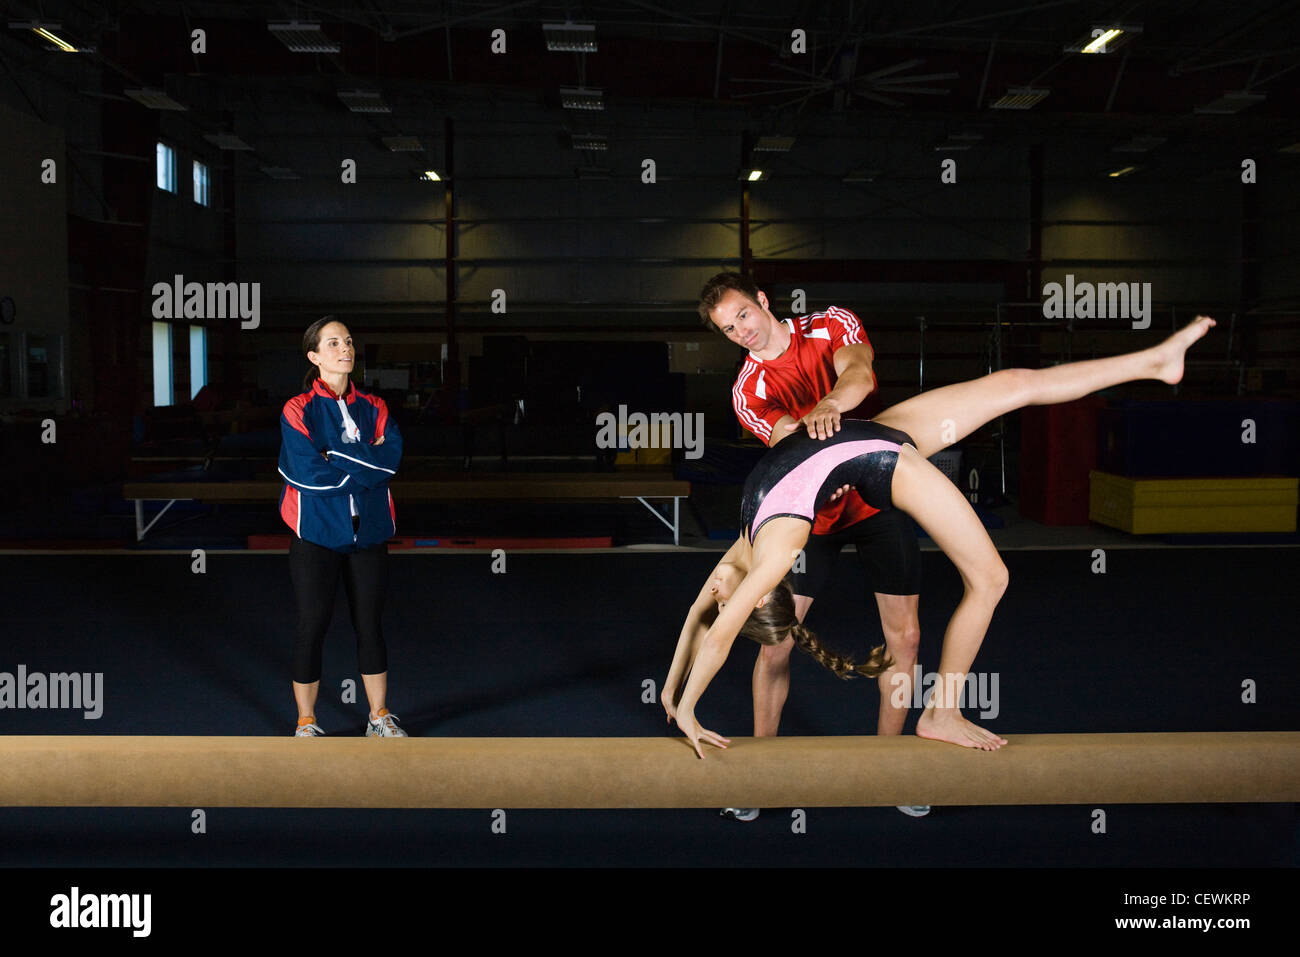 Female gymnast practicing on balance beam with coach Stock Photo